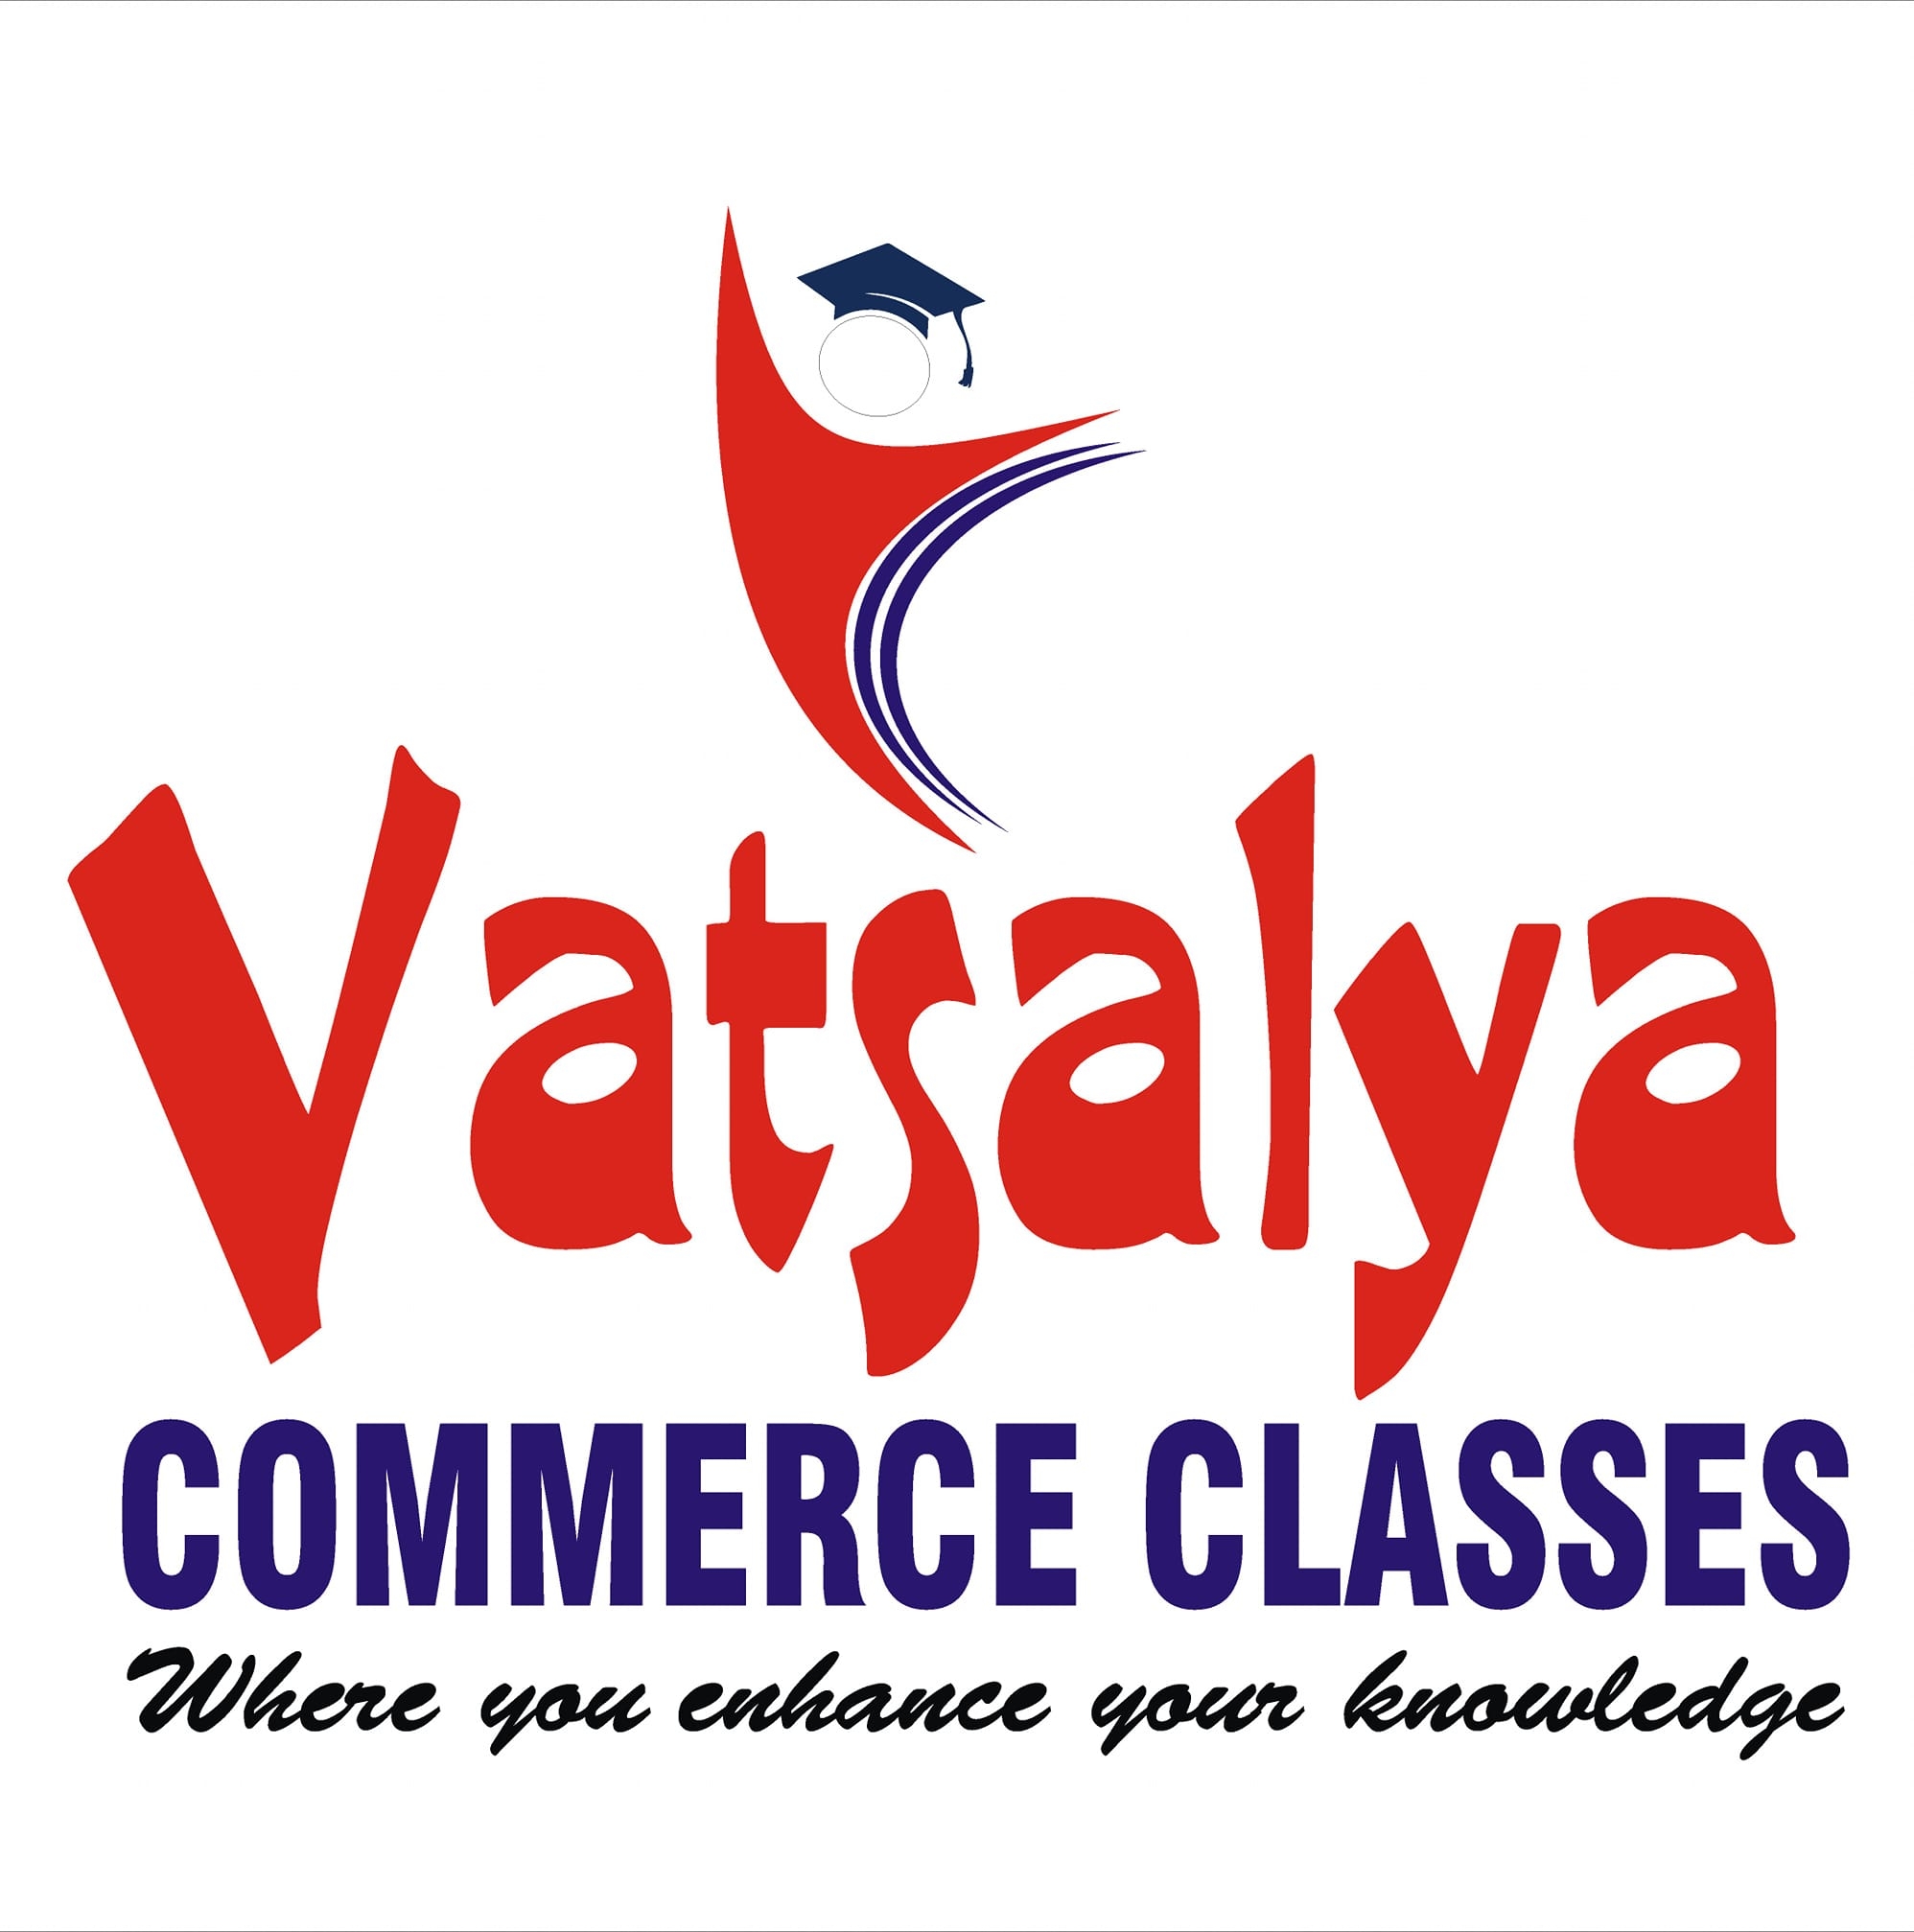 Vatsalya Commerce Classes Logo